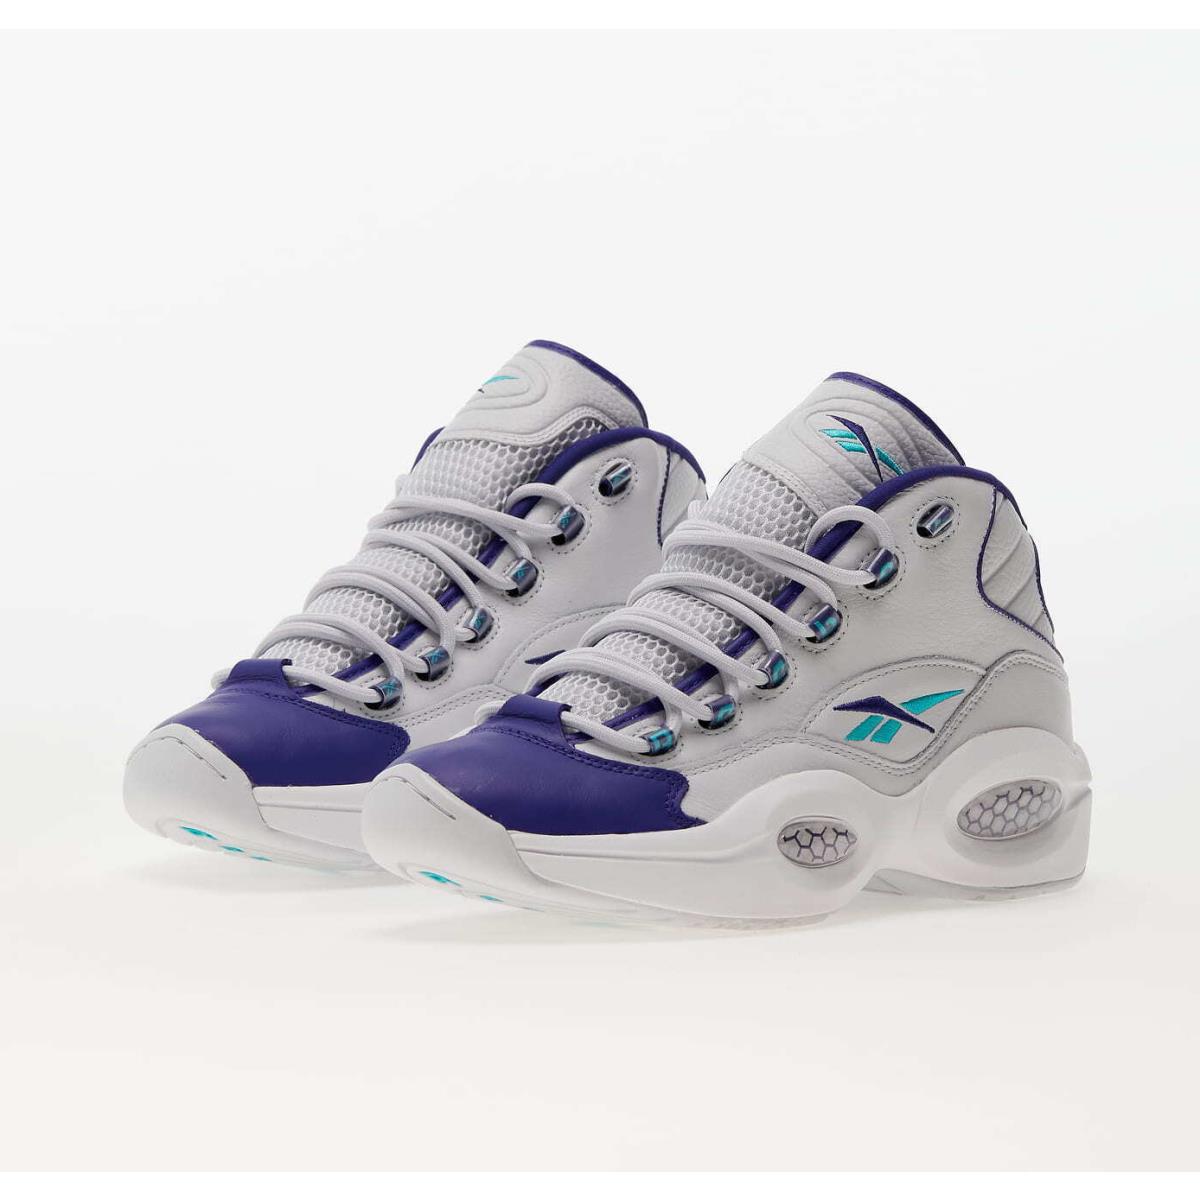 Reebok Question Mid Hornets GW8853 Grey Purple Basketball Shoes Sneakers